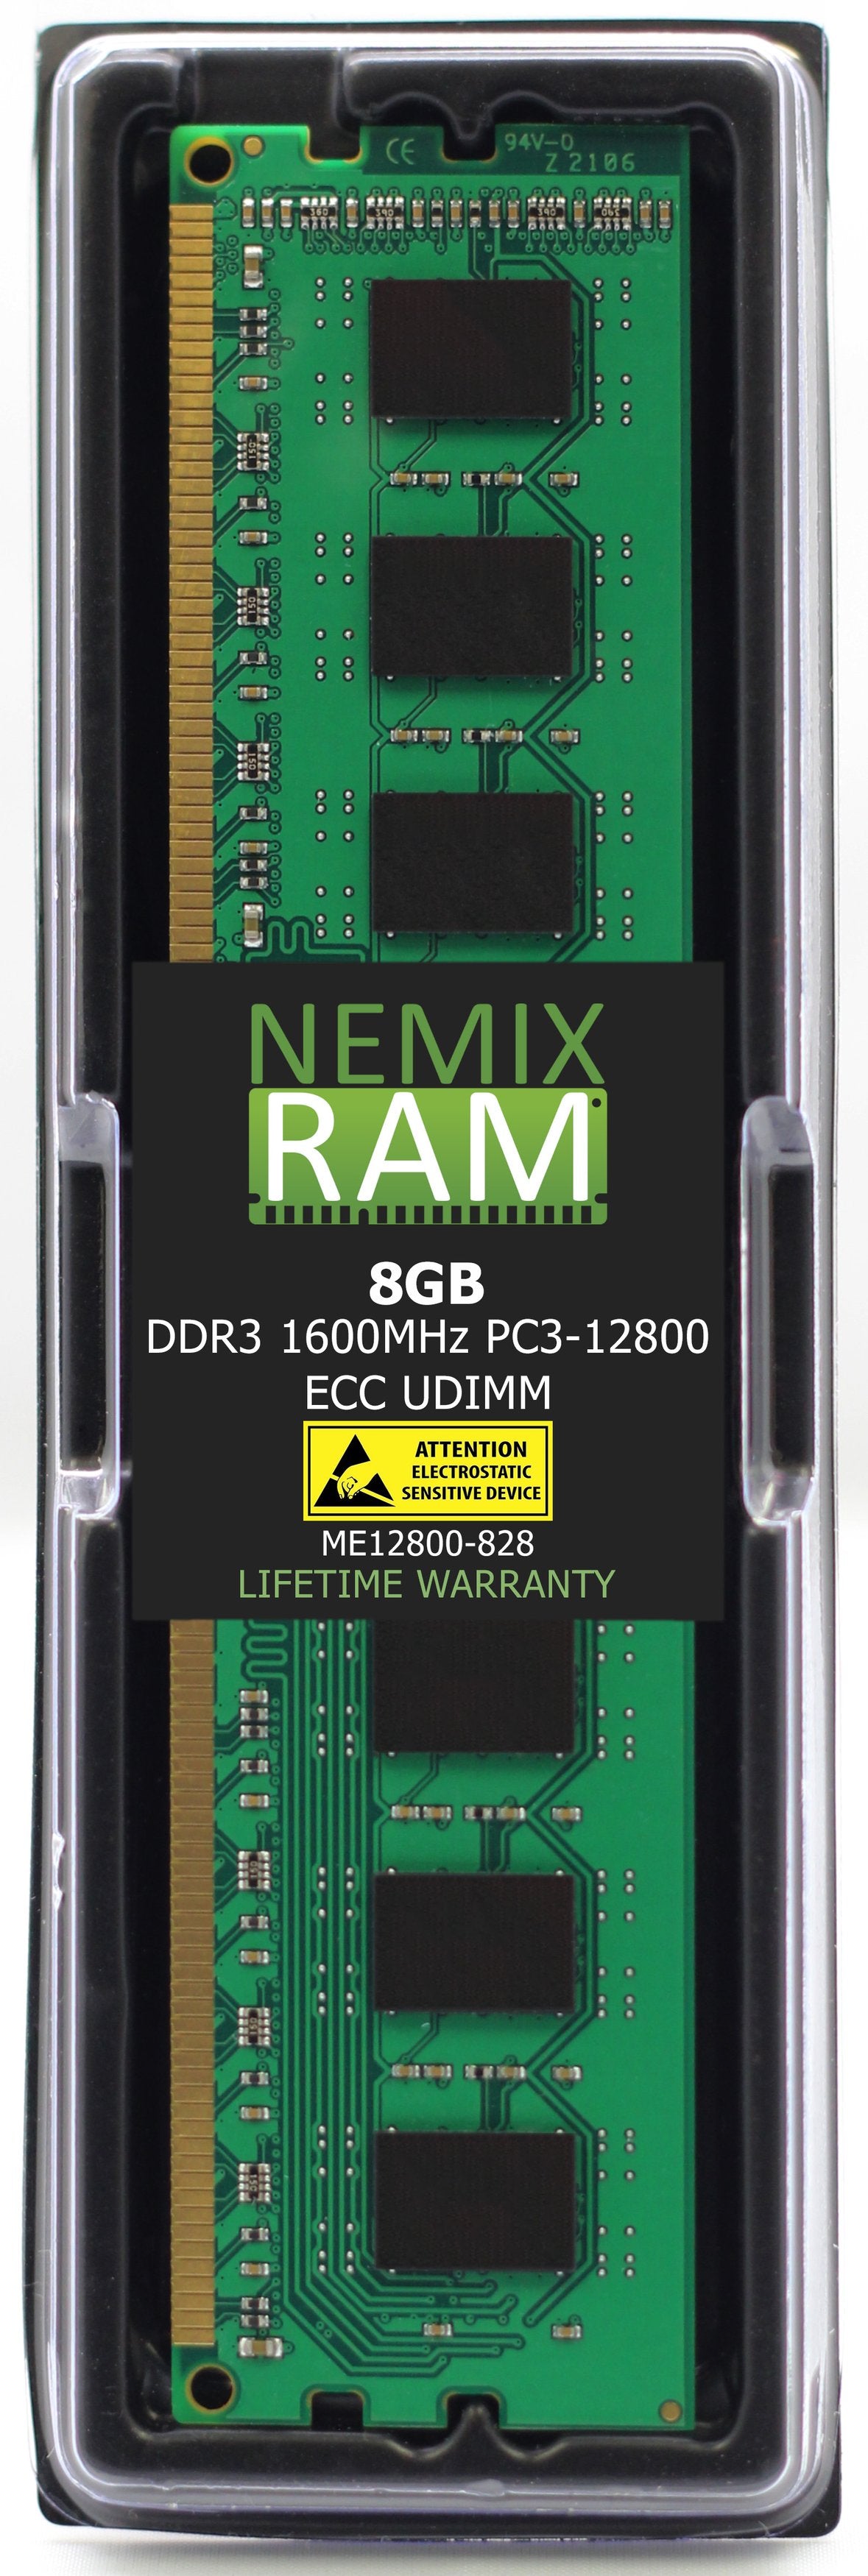 8GB DDR3 1600MHZ PC3-12800 ECC UDIMM Compatible with Supermicro MEM-DR380L-SL01-EU16